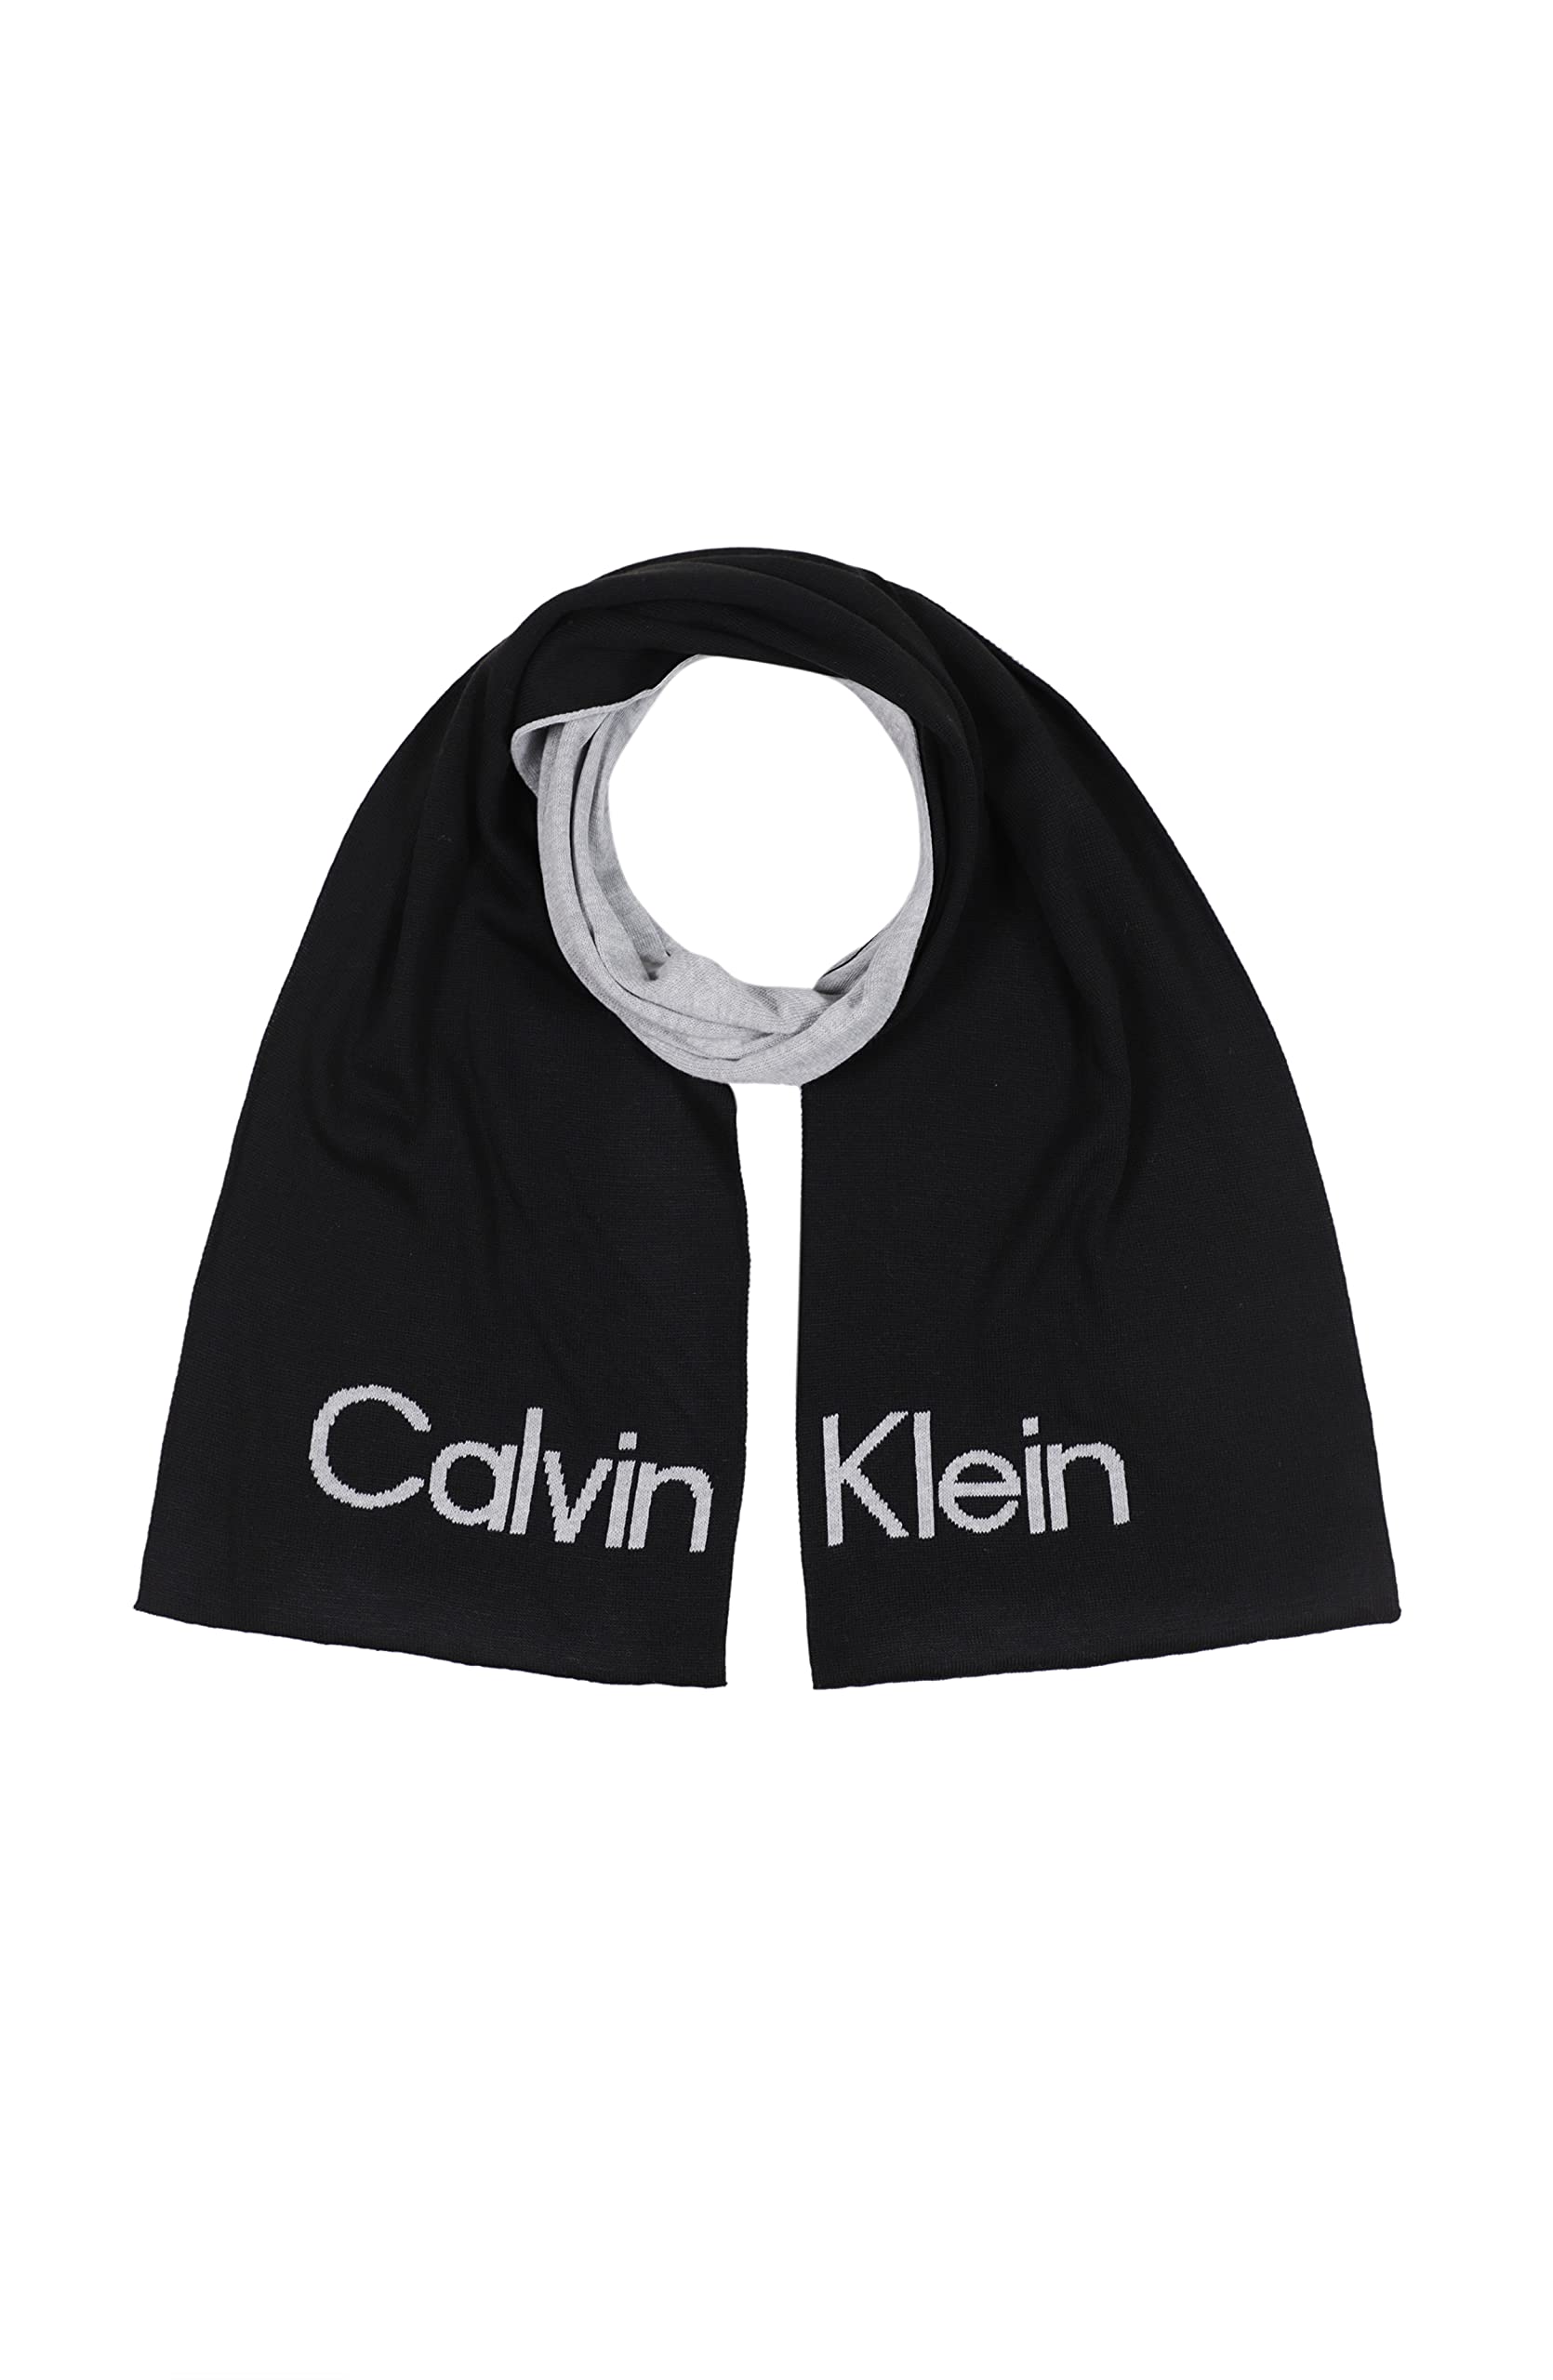 Calvin Klein mens Men's Reversible Scarf